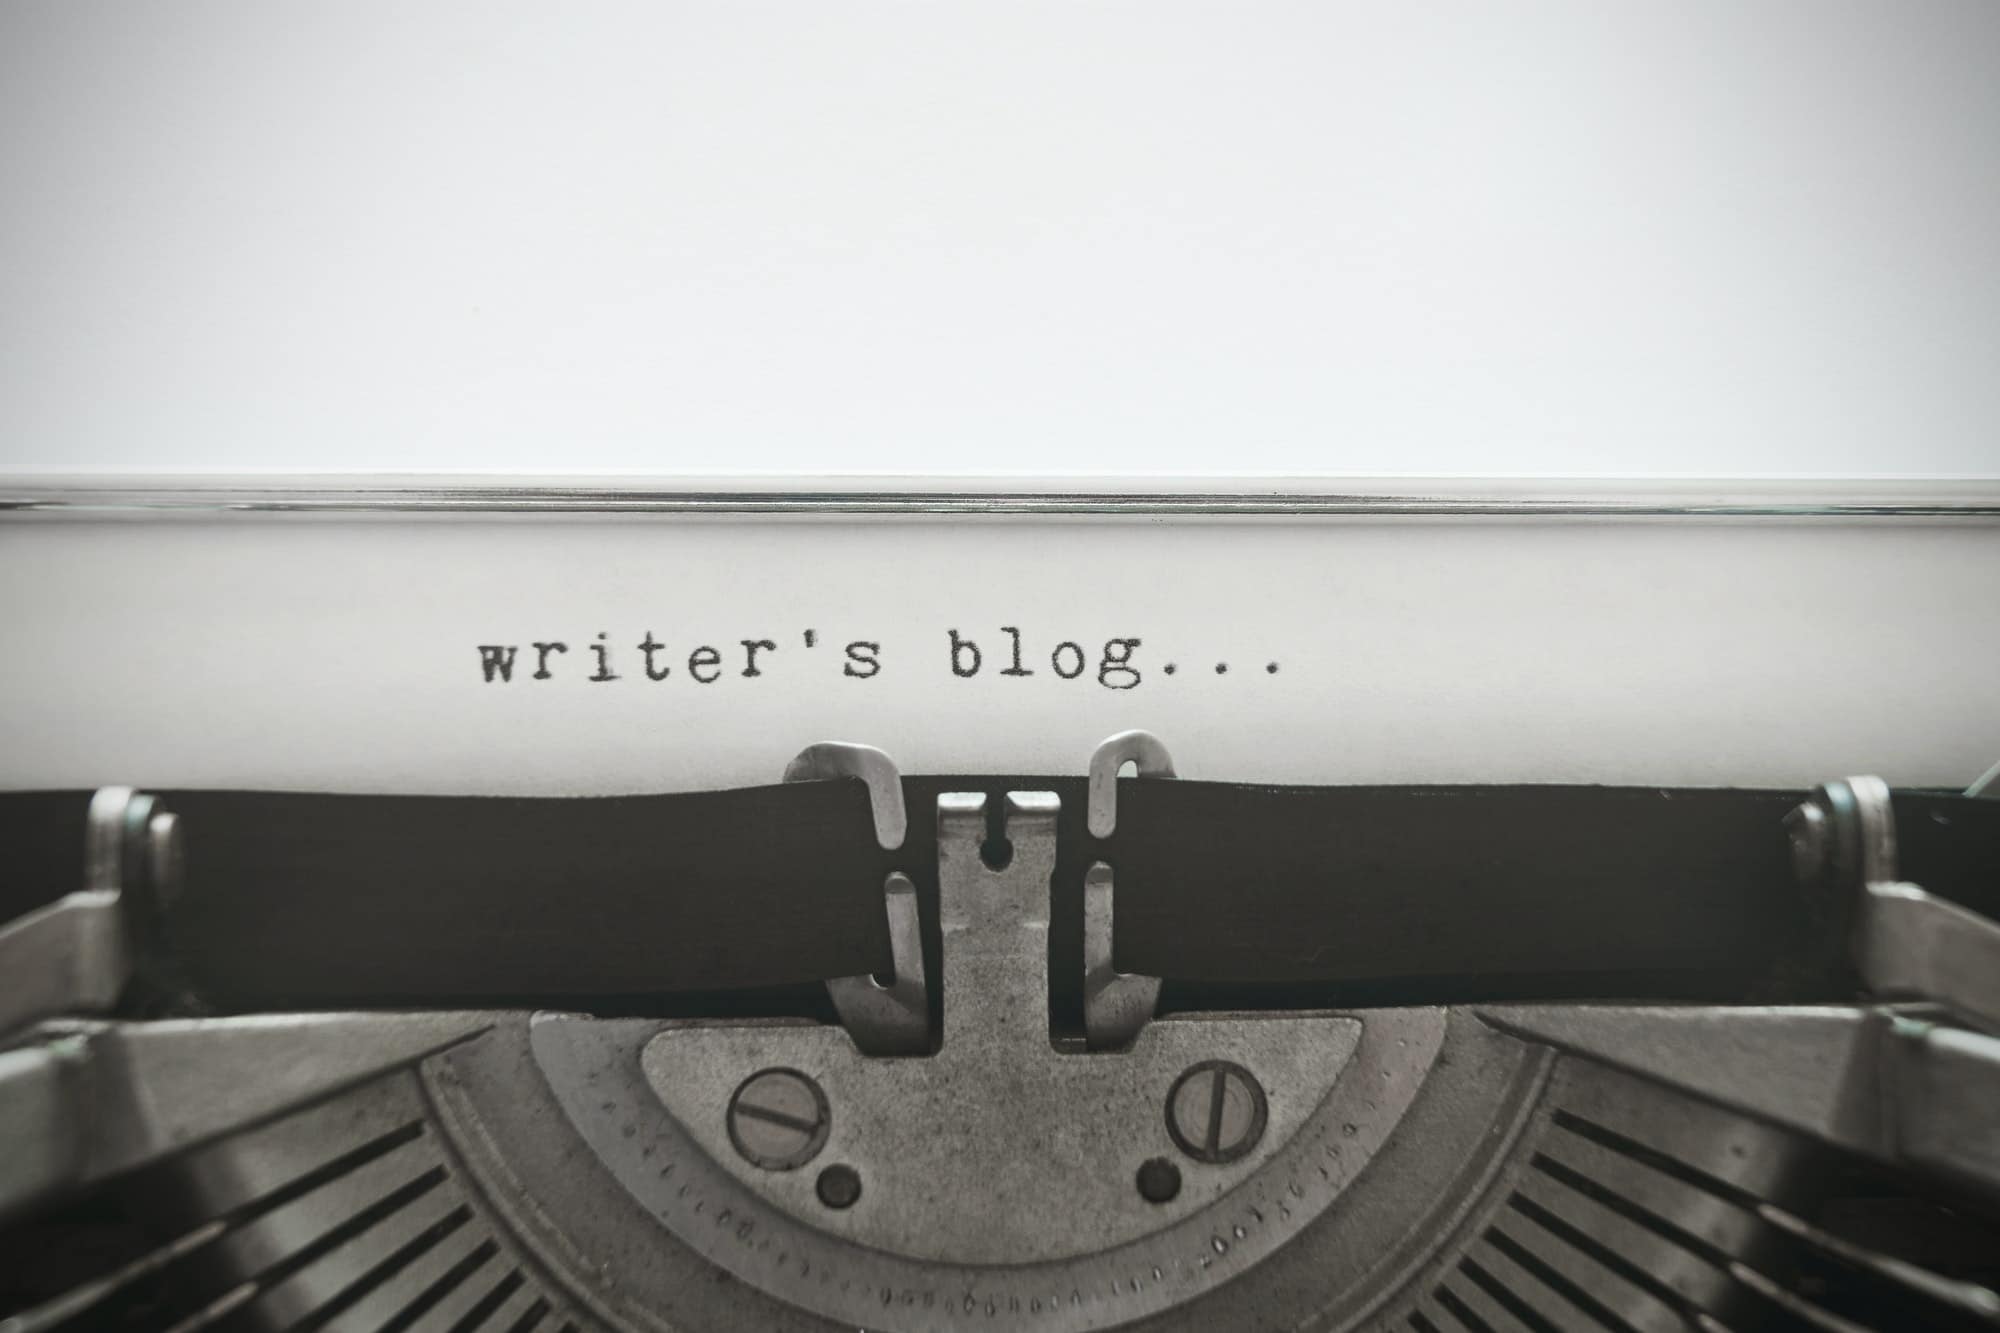 Words "writer's blog" written with old typewriter